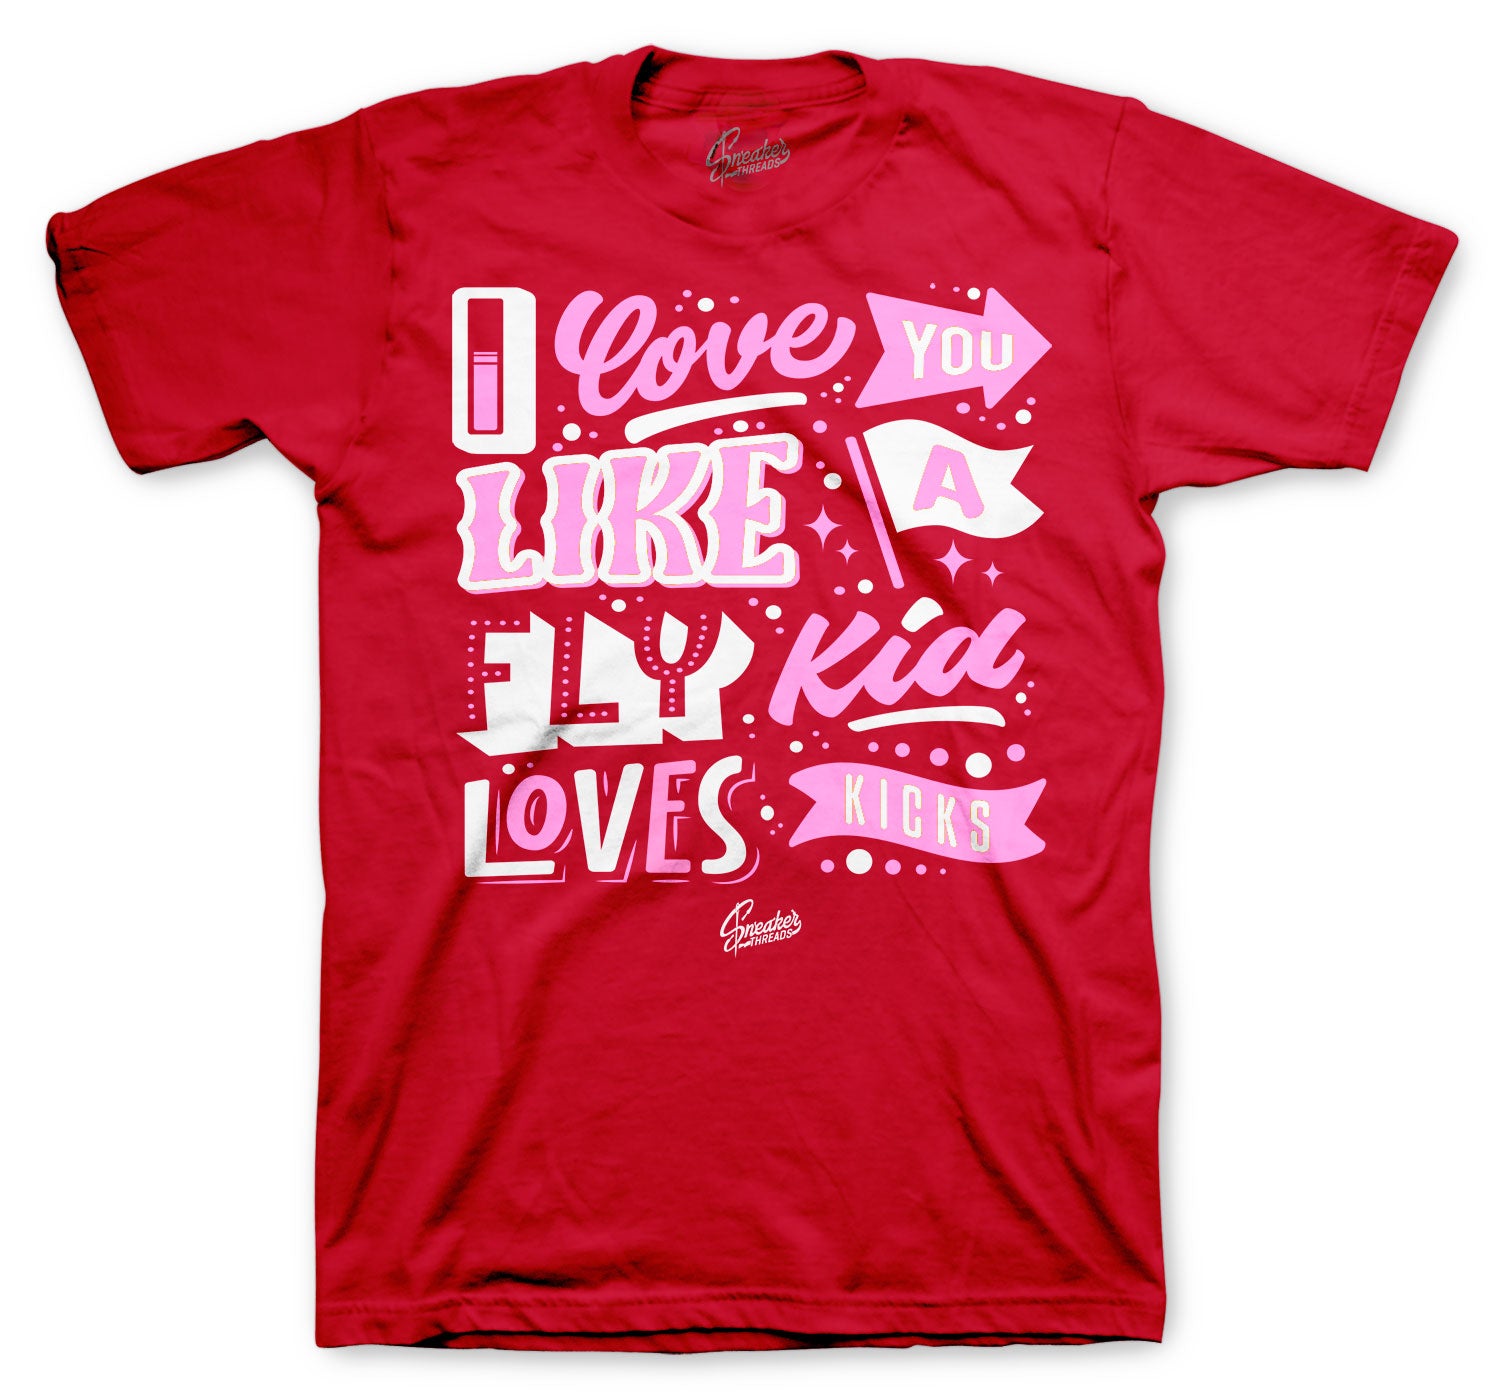 Retro 5 Pink Foam Shirt - Love Kicks - Gym Red